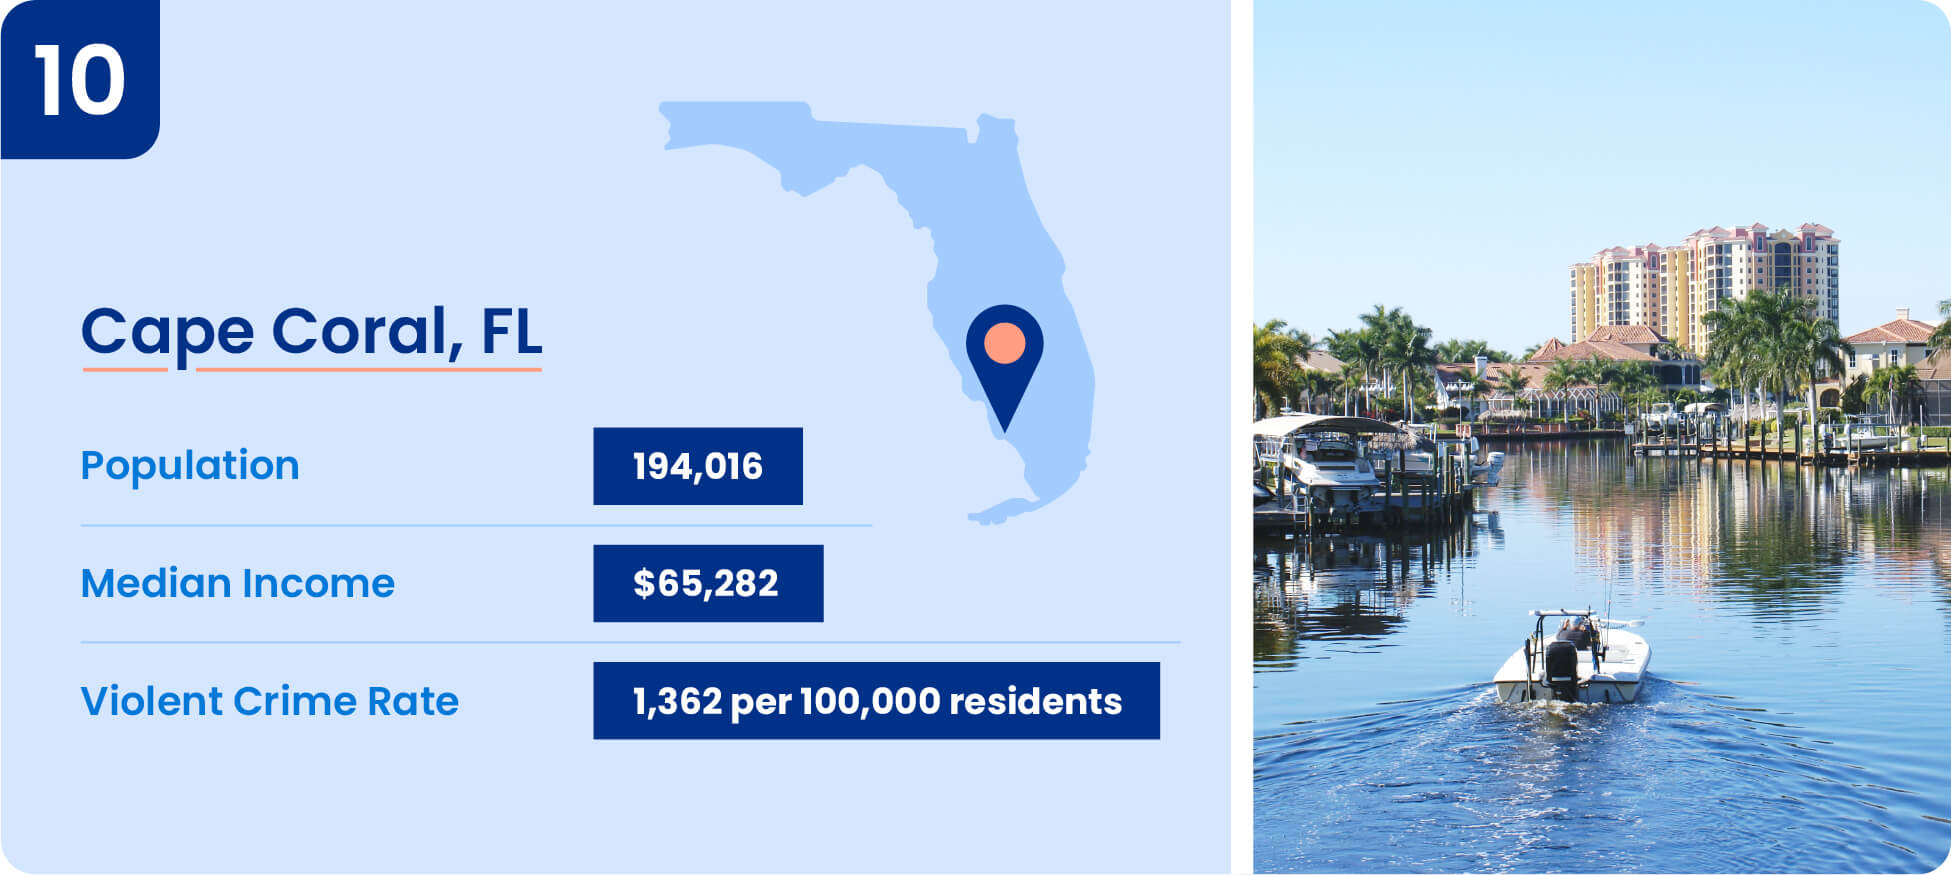 Image shows safety data including median income, population, and violent crime rate for Cape Coral, Florida.